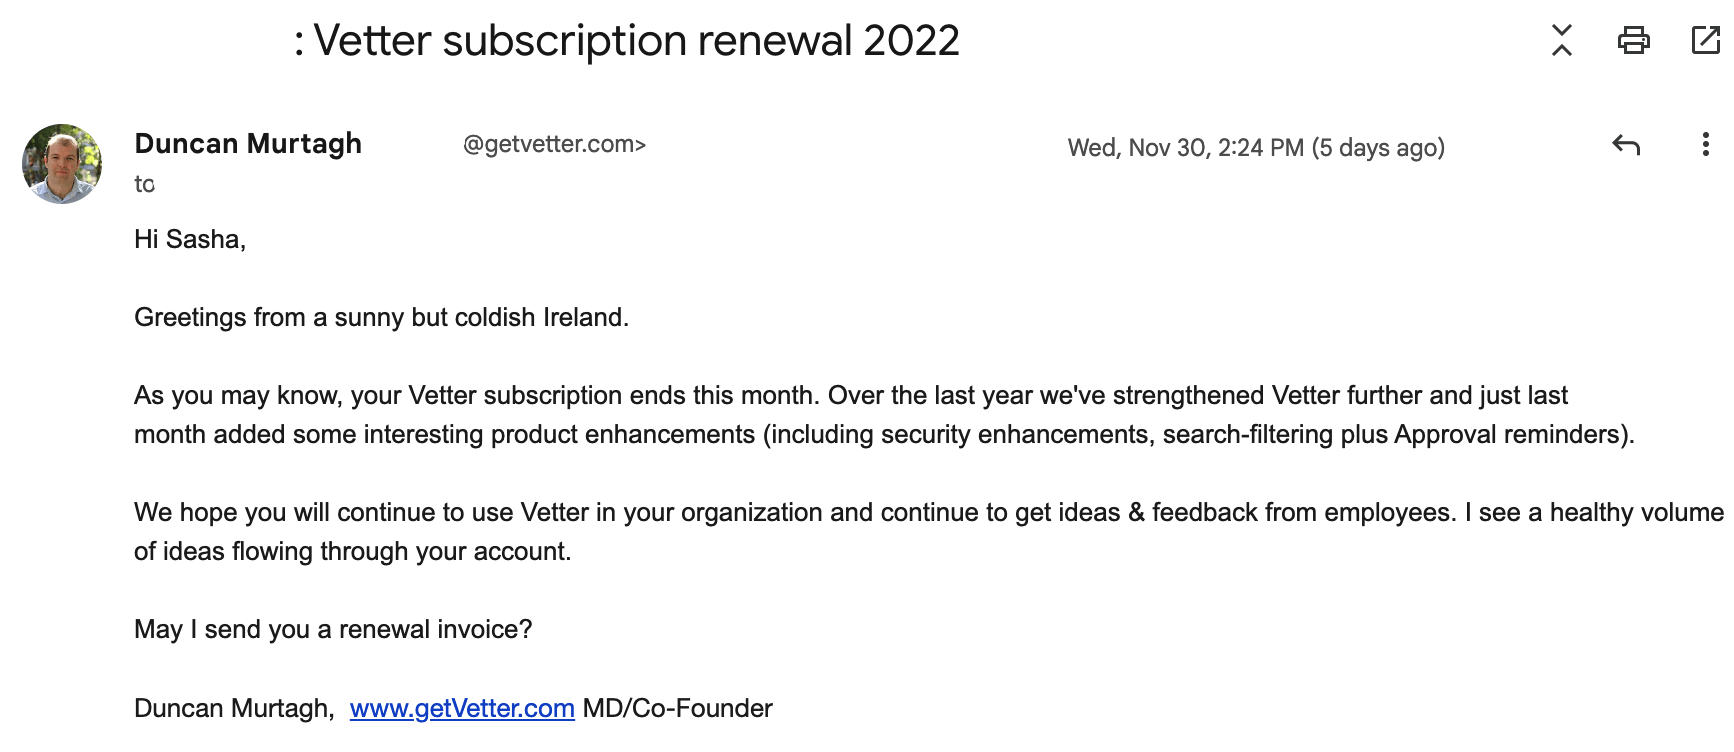 SaaS Renewal Email Examples: Vetter's renewal email